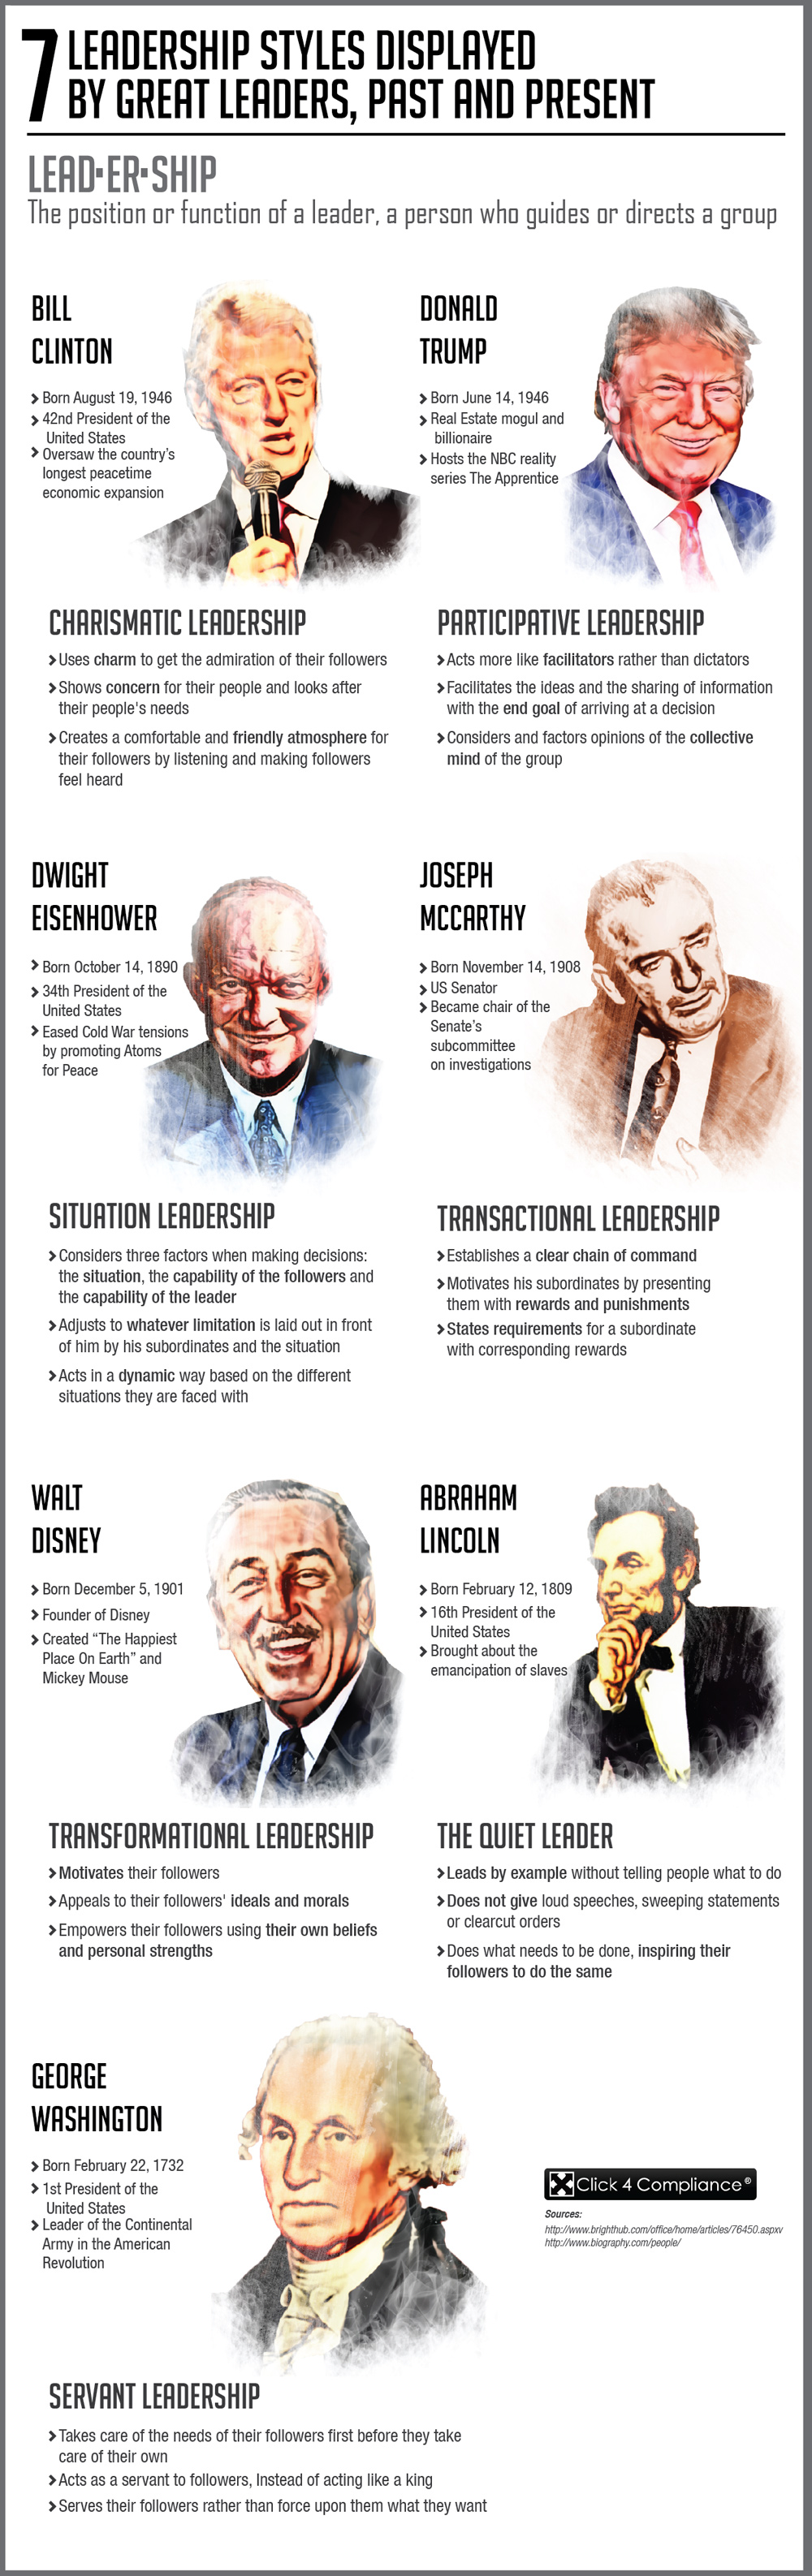 7 Leadership Style Displayed by Great Leaders